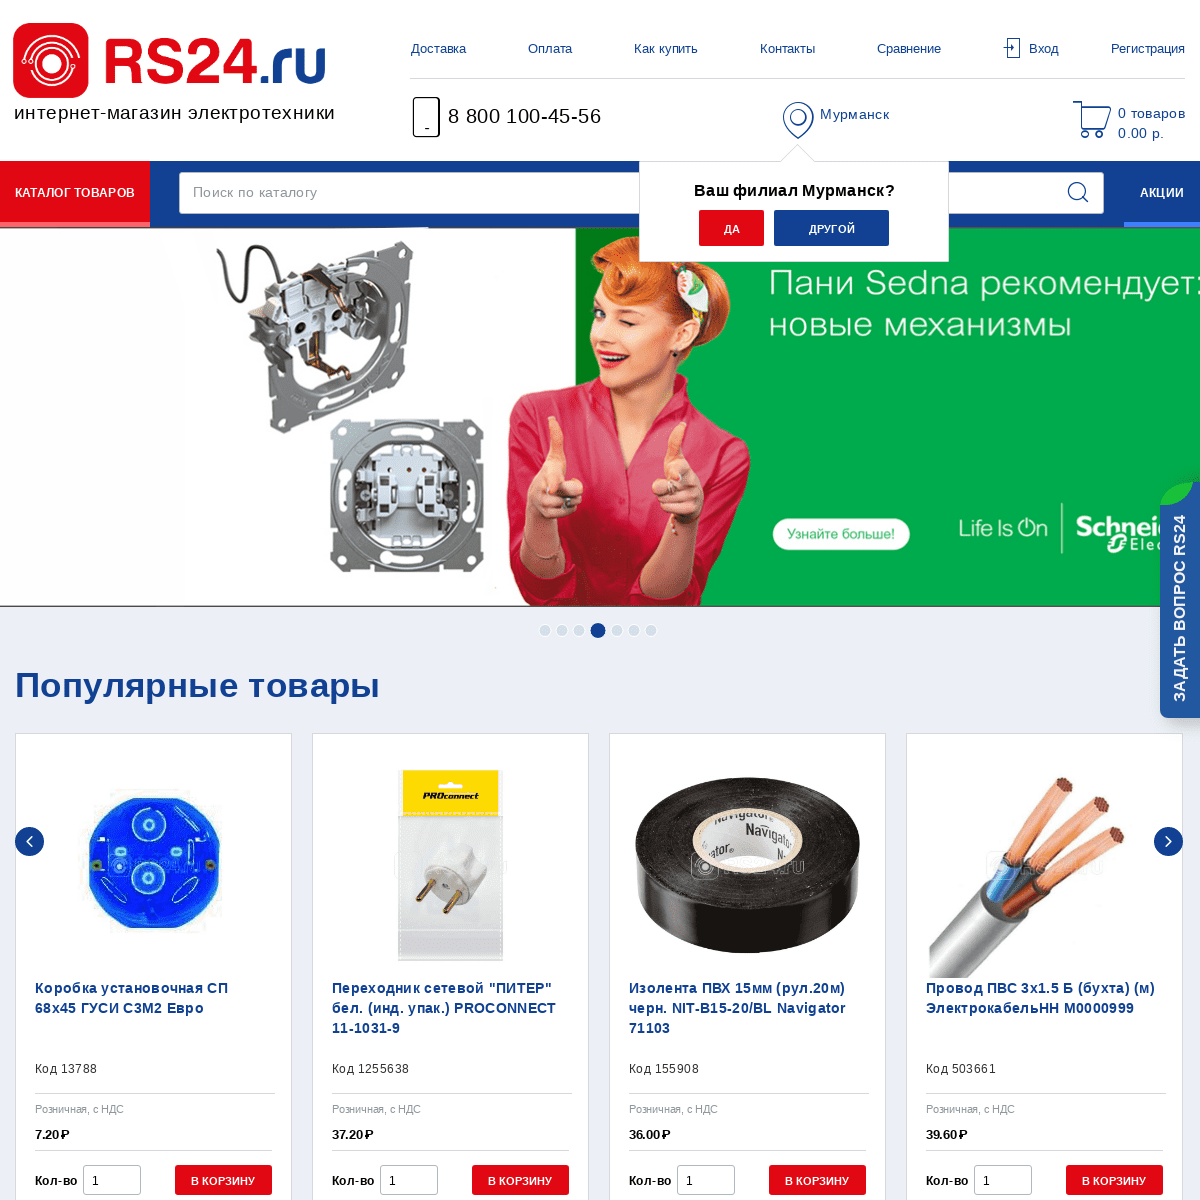 RS24.ru - интернет-магазин электротехники для юридических лиц